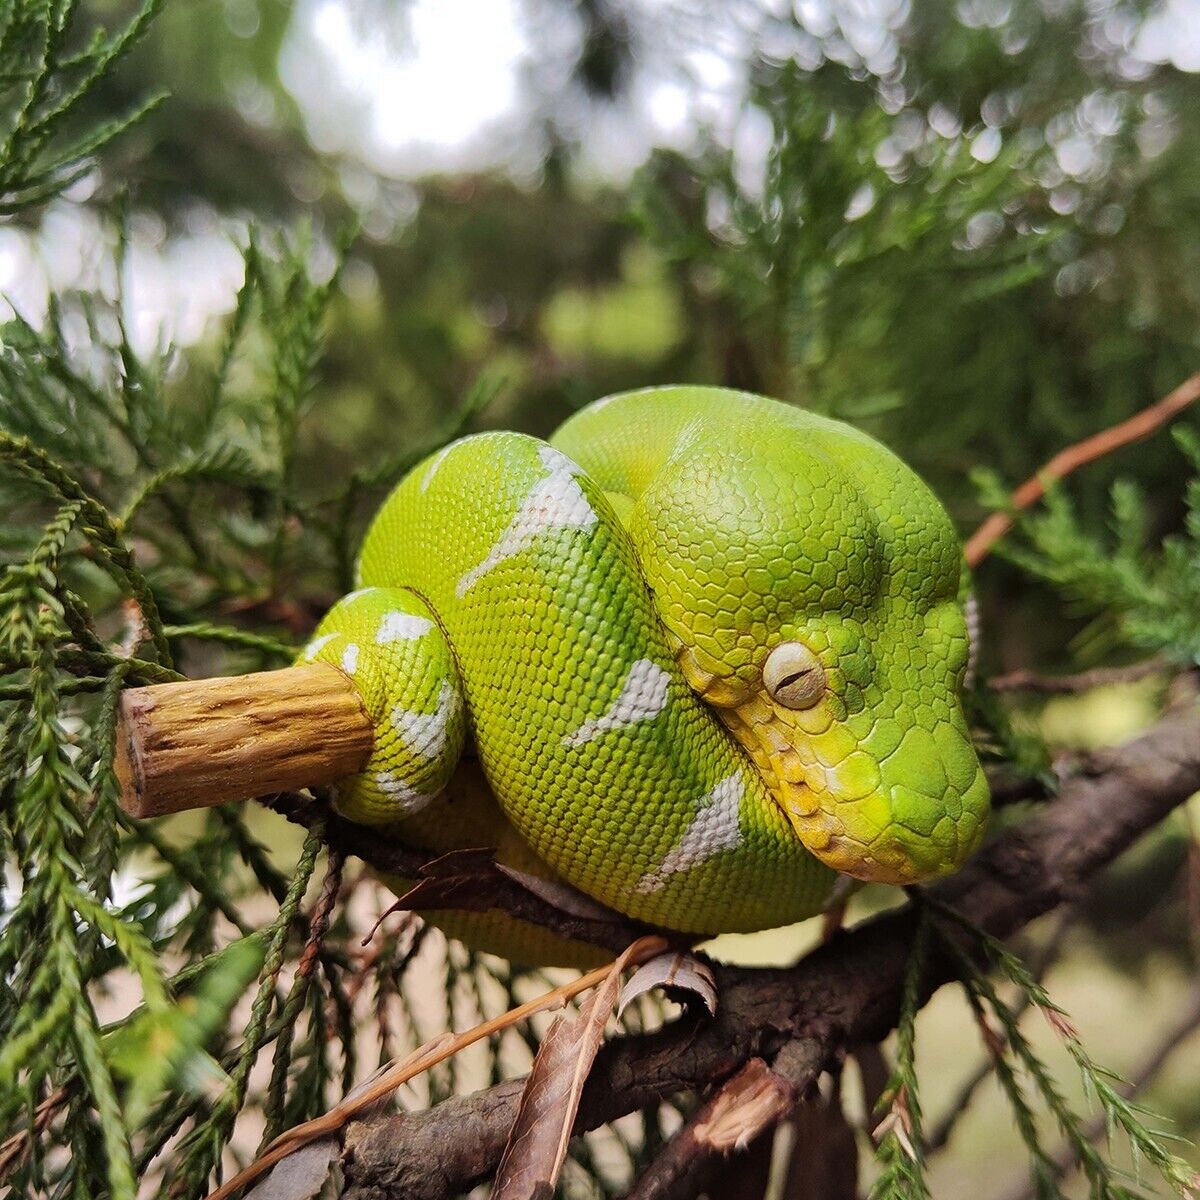 【In-Stock】 Animal Heavenly Body Emerald Tree Boa Corallus caninus Snake Statue